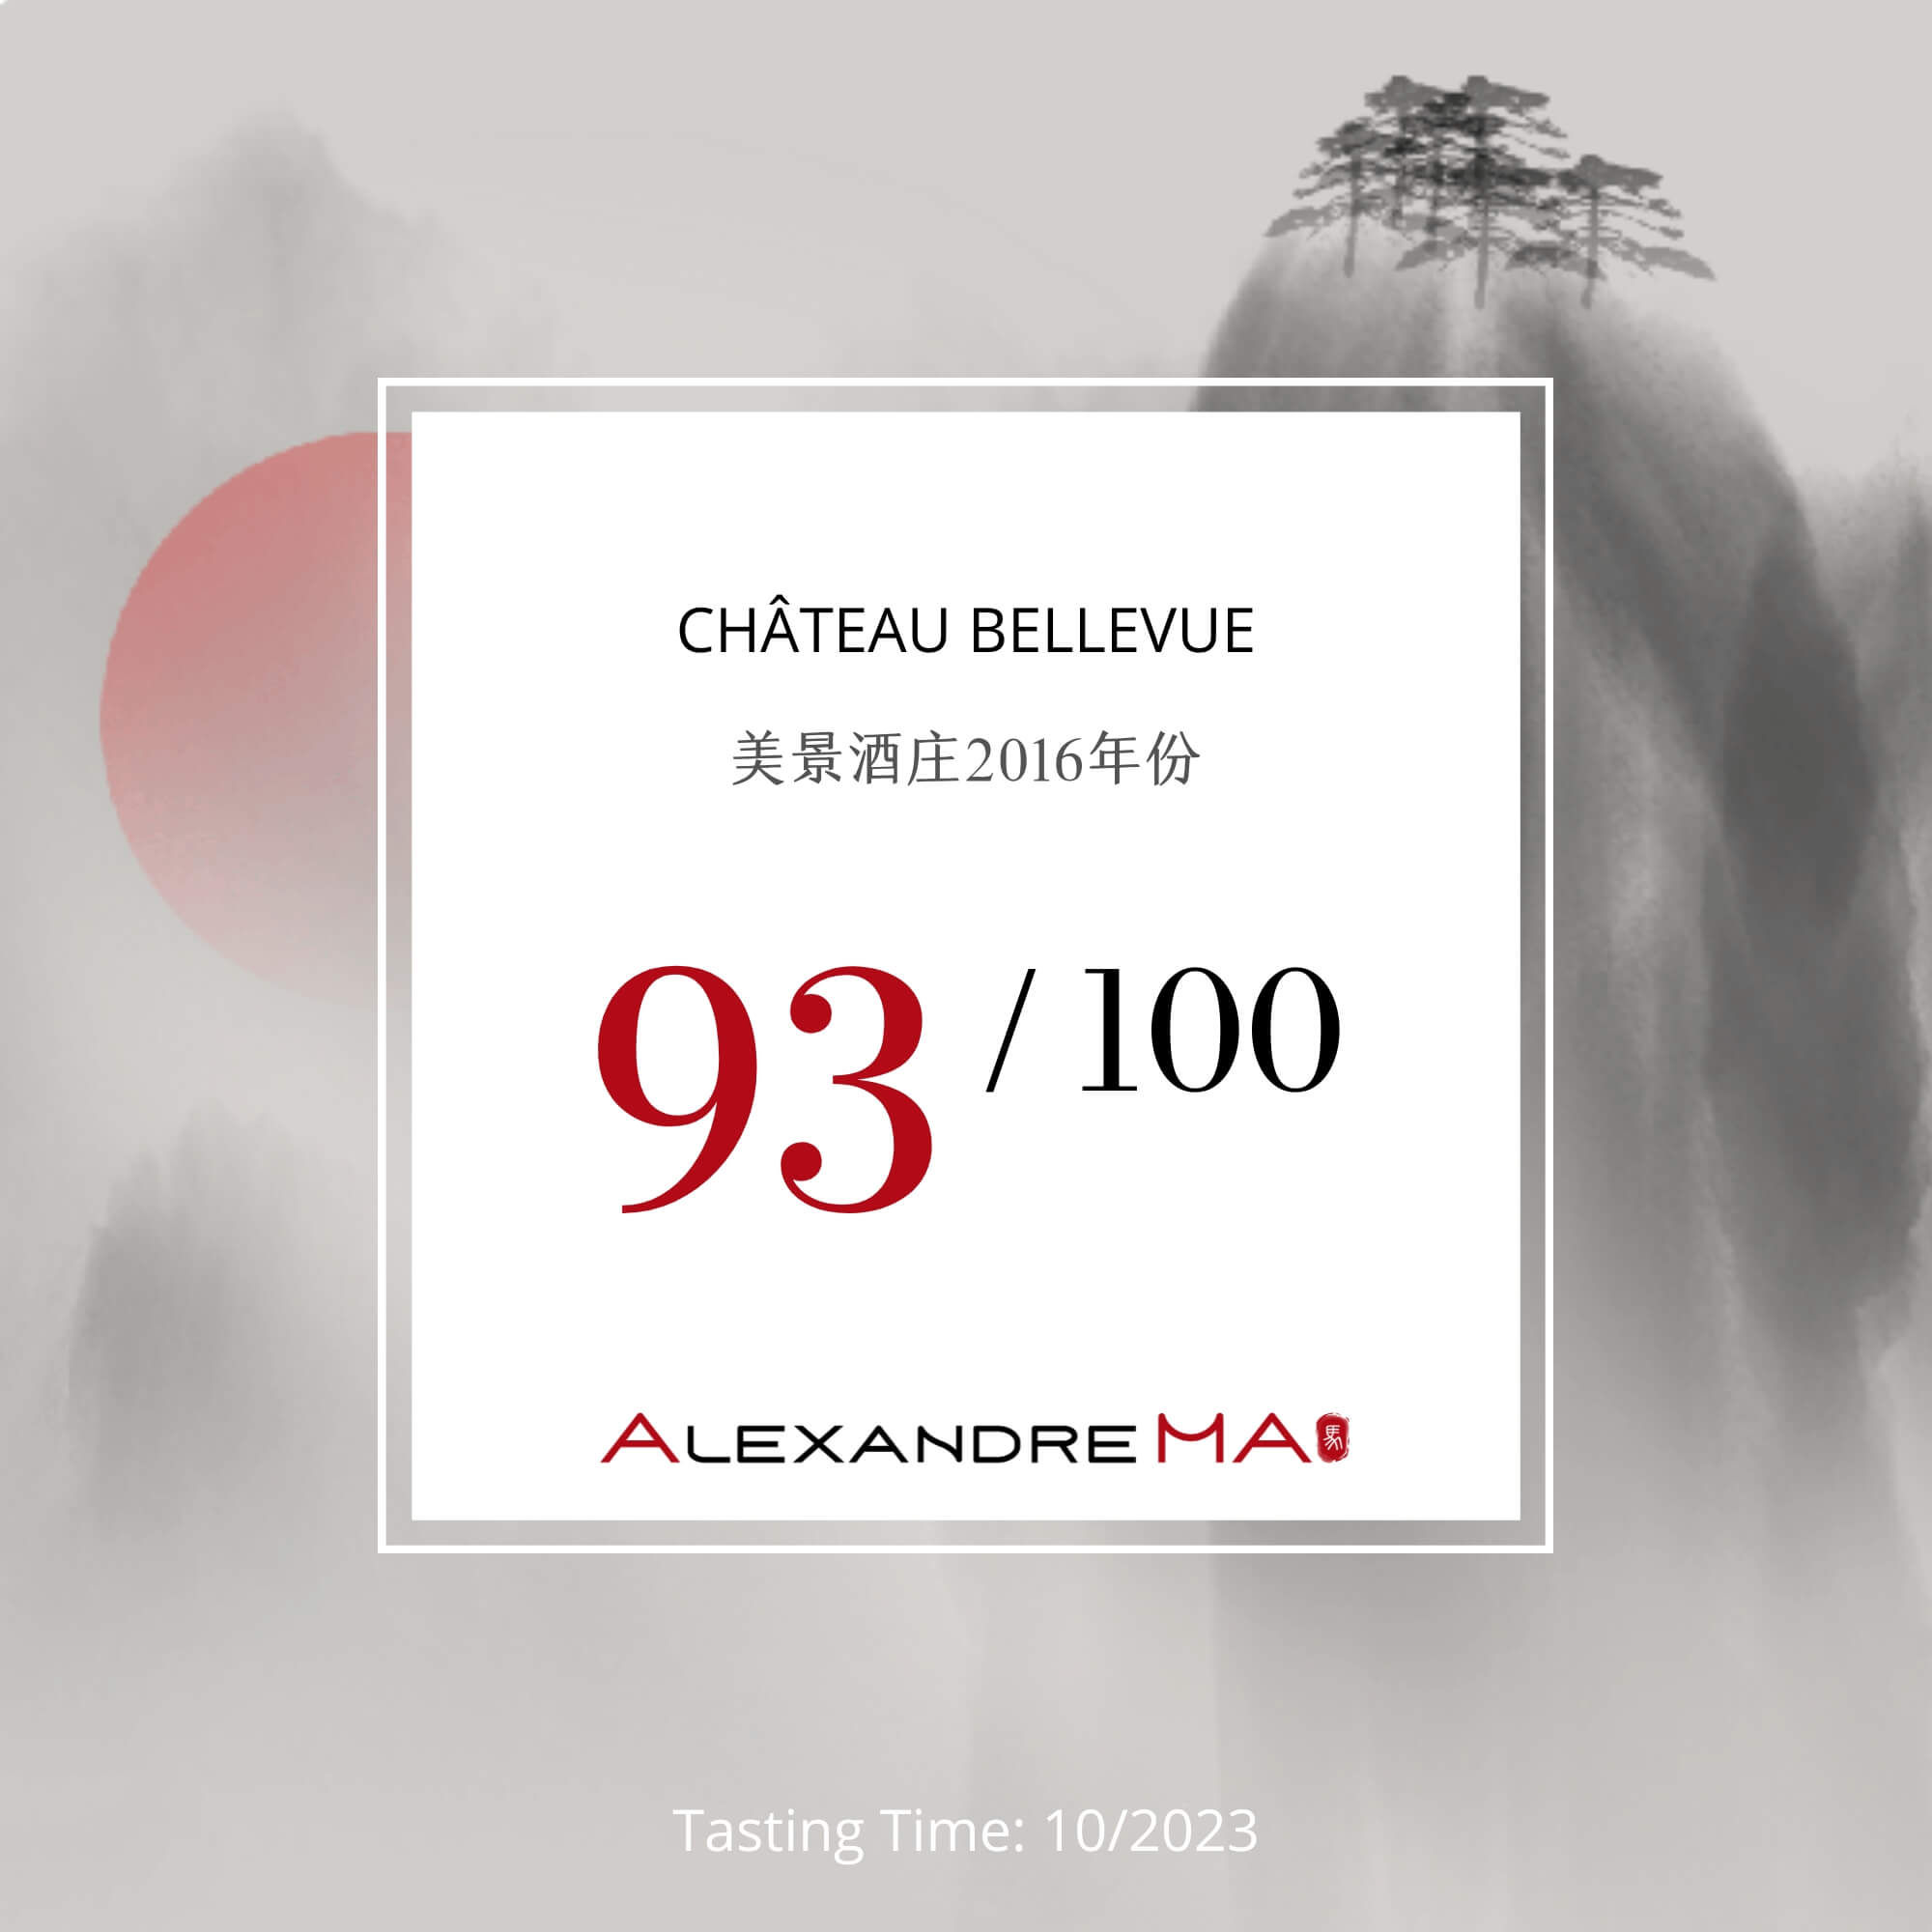 Château Bellevue 2016 - Alexandre MA